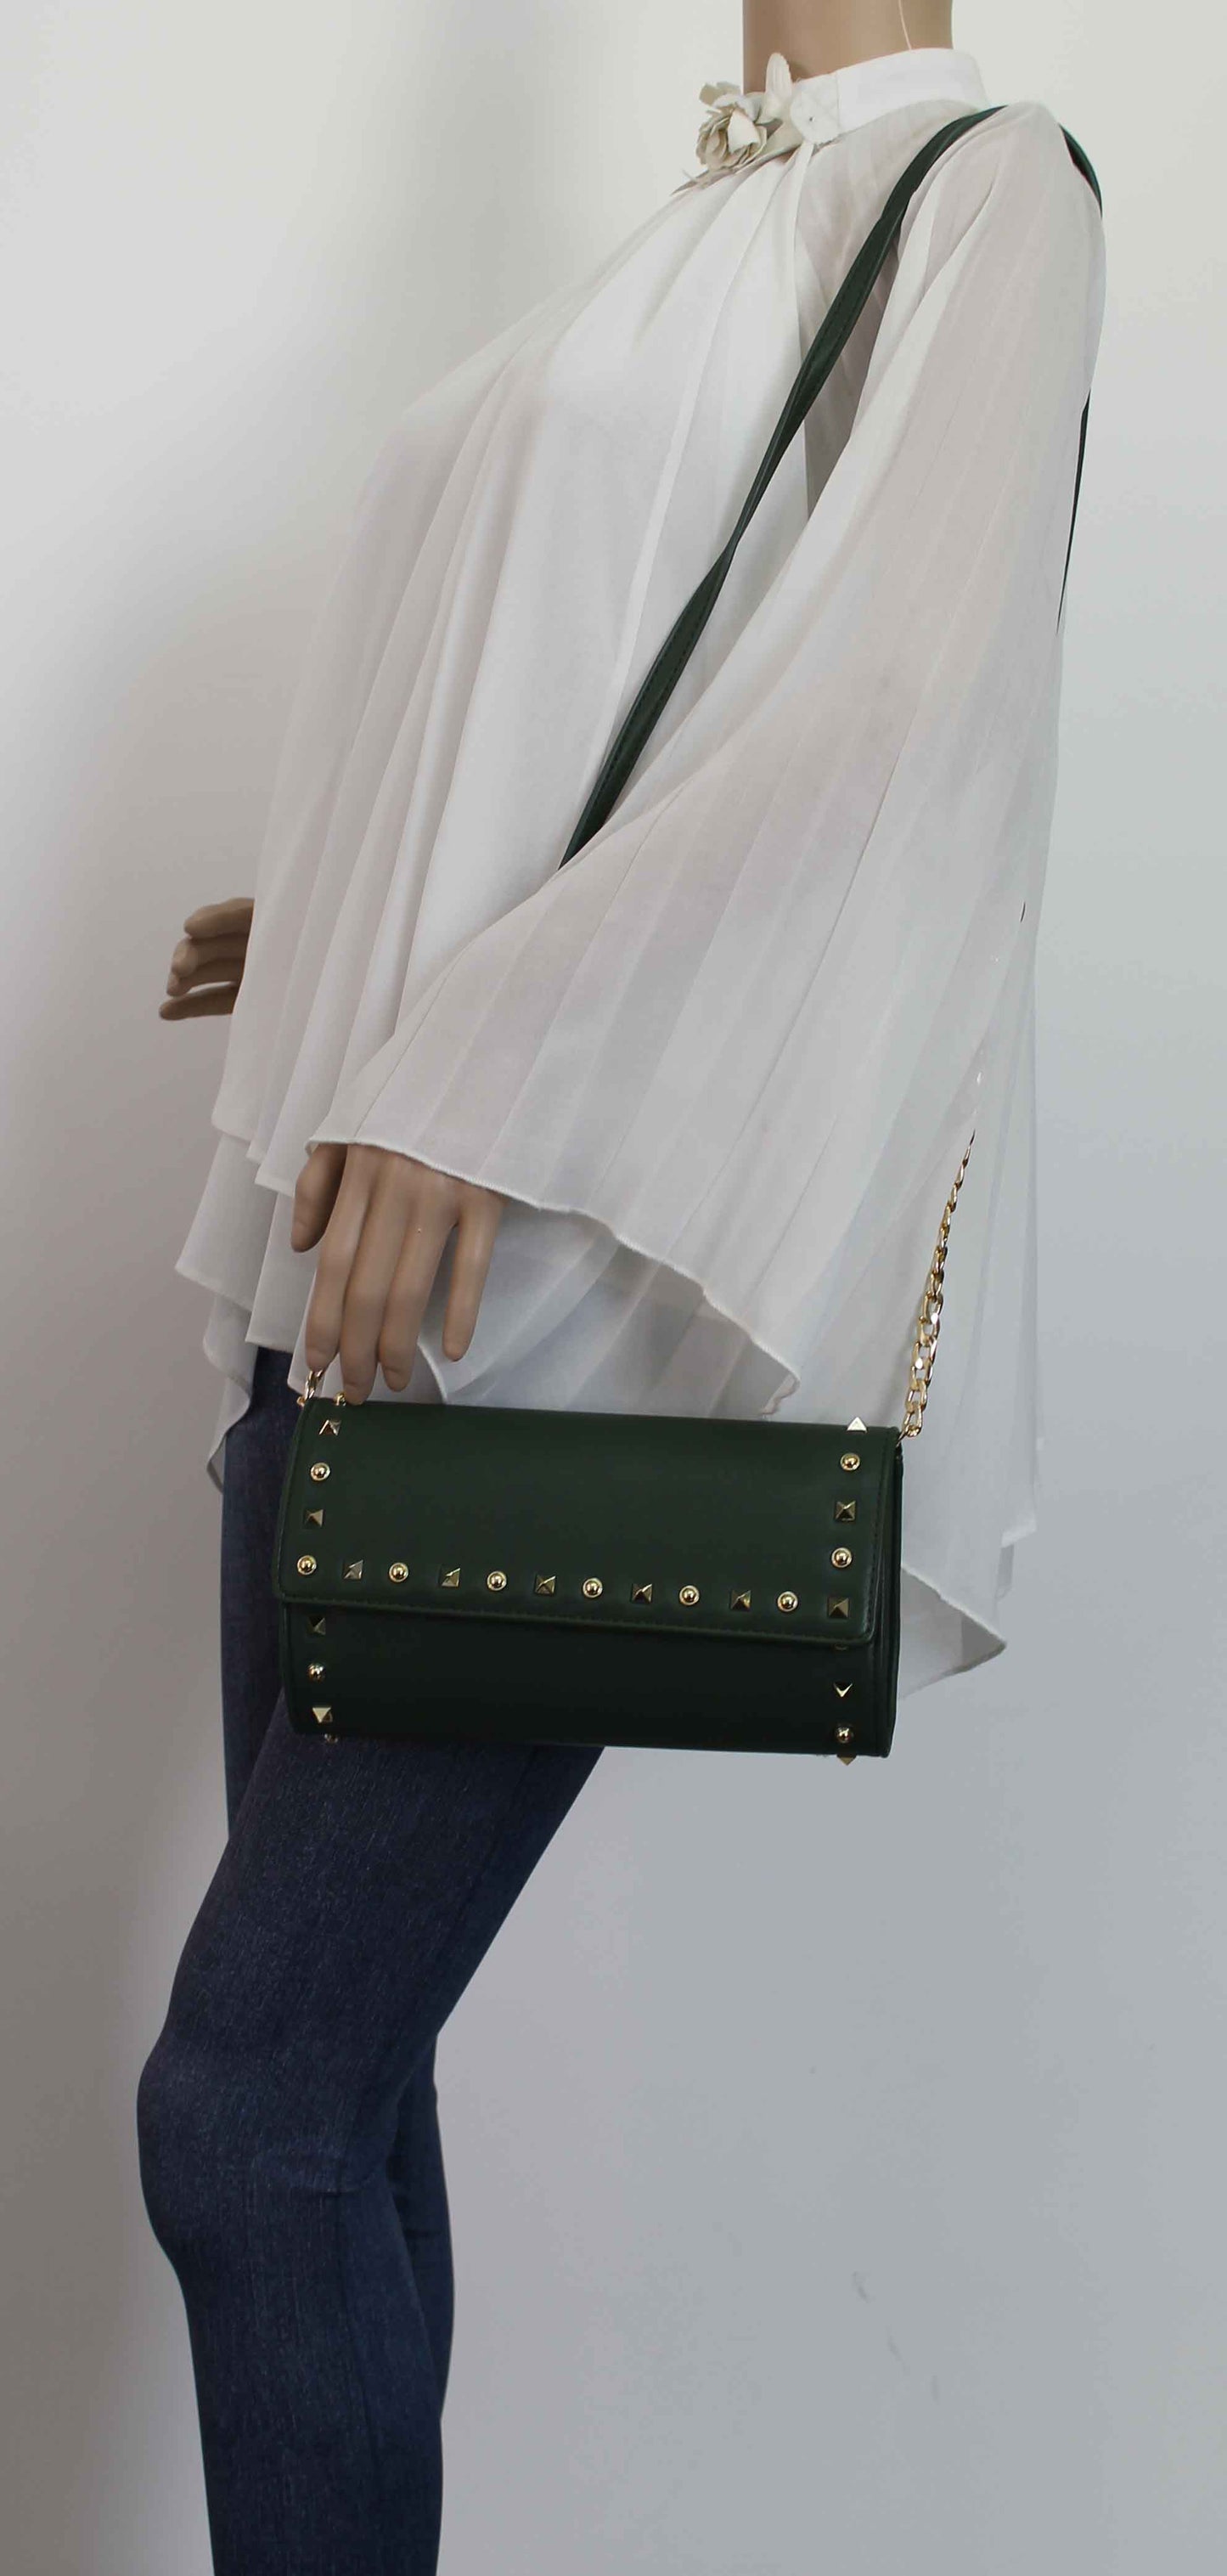 SWANKYSWANS Katie Clutch Bag Green Cute Cheap Clutch Bag For Weddings School and Work